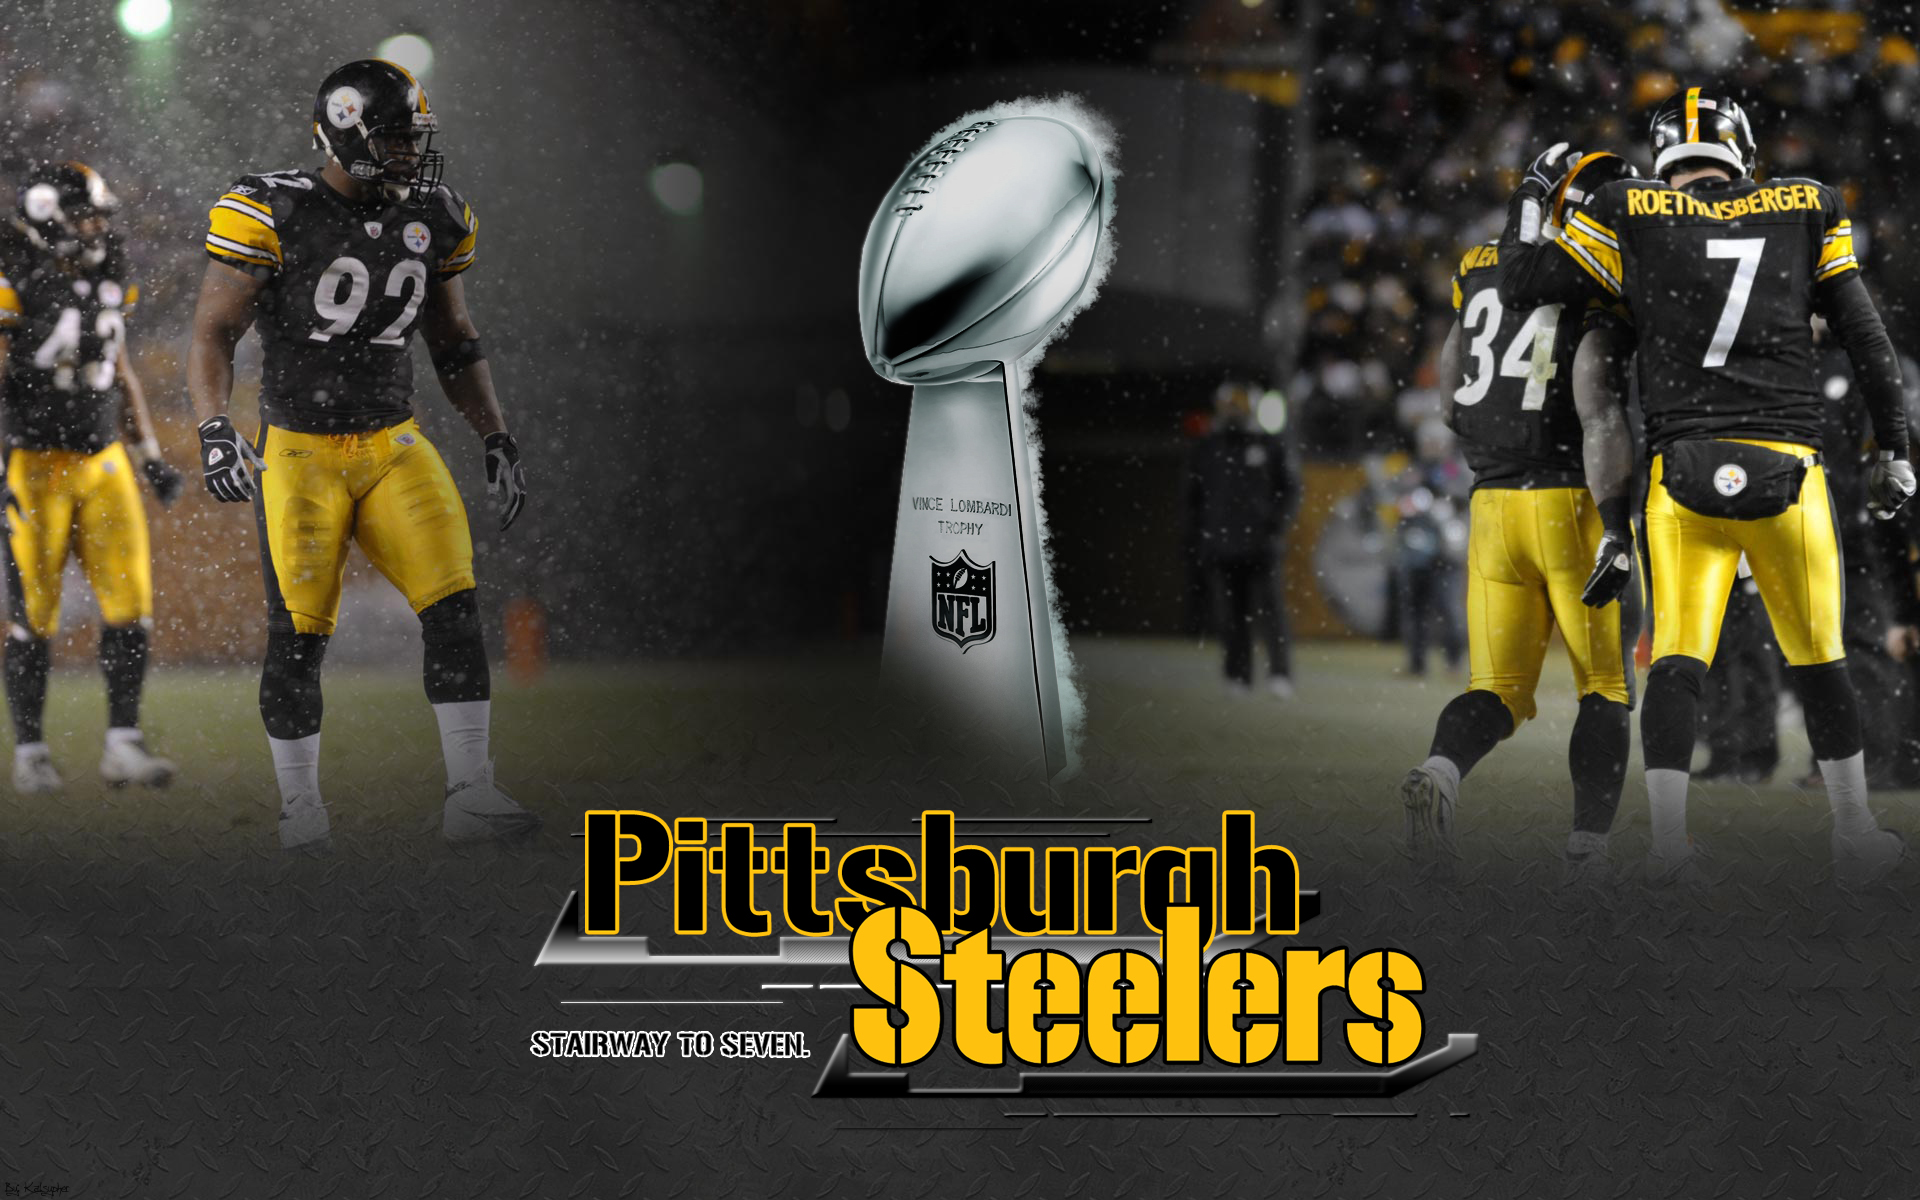 The Ultimate Burgh Steelers Desktop Wallpaper Collection